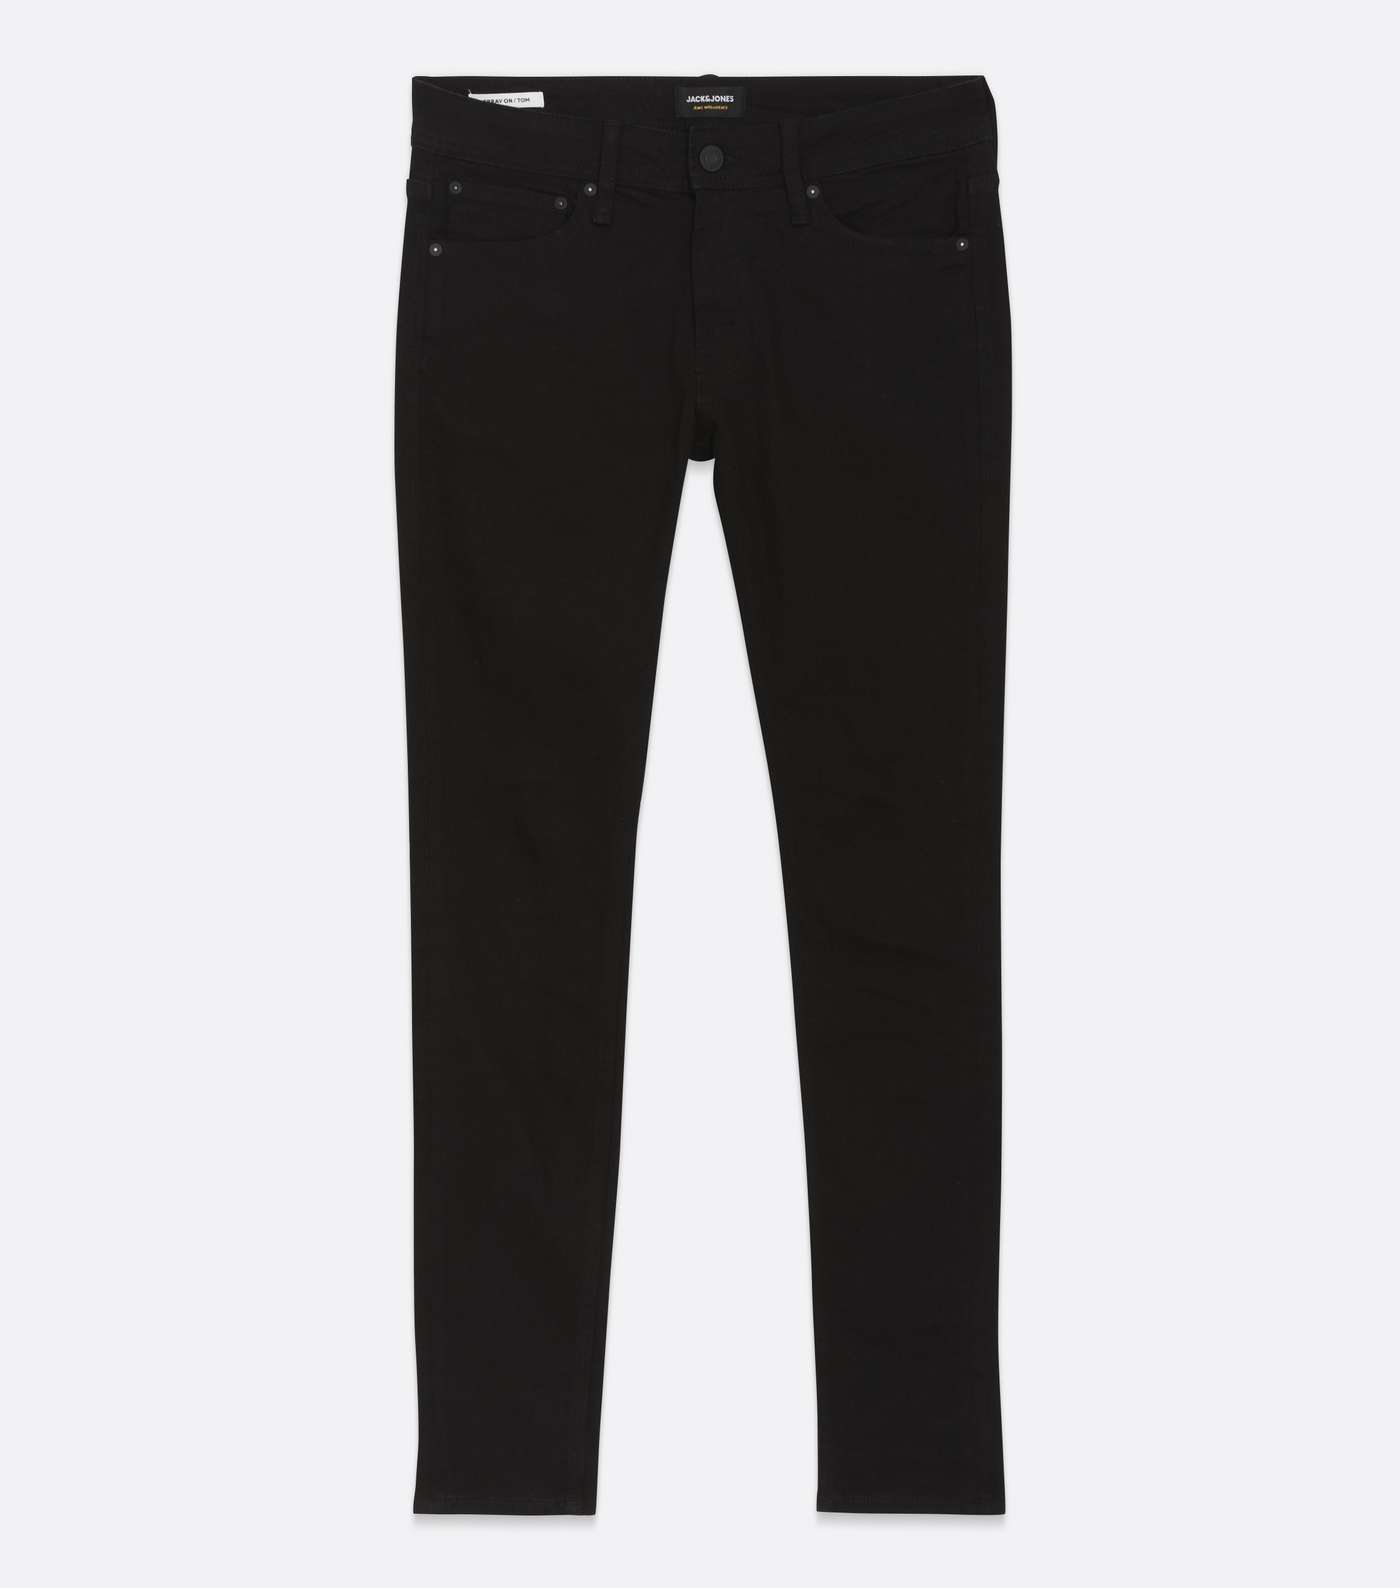 Jack & Jones Black Dark Wash Skinny Jeans Image 5